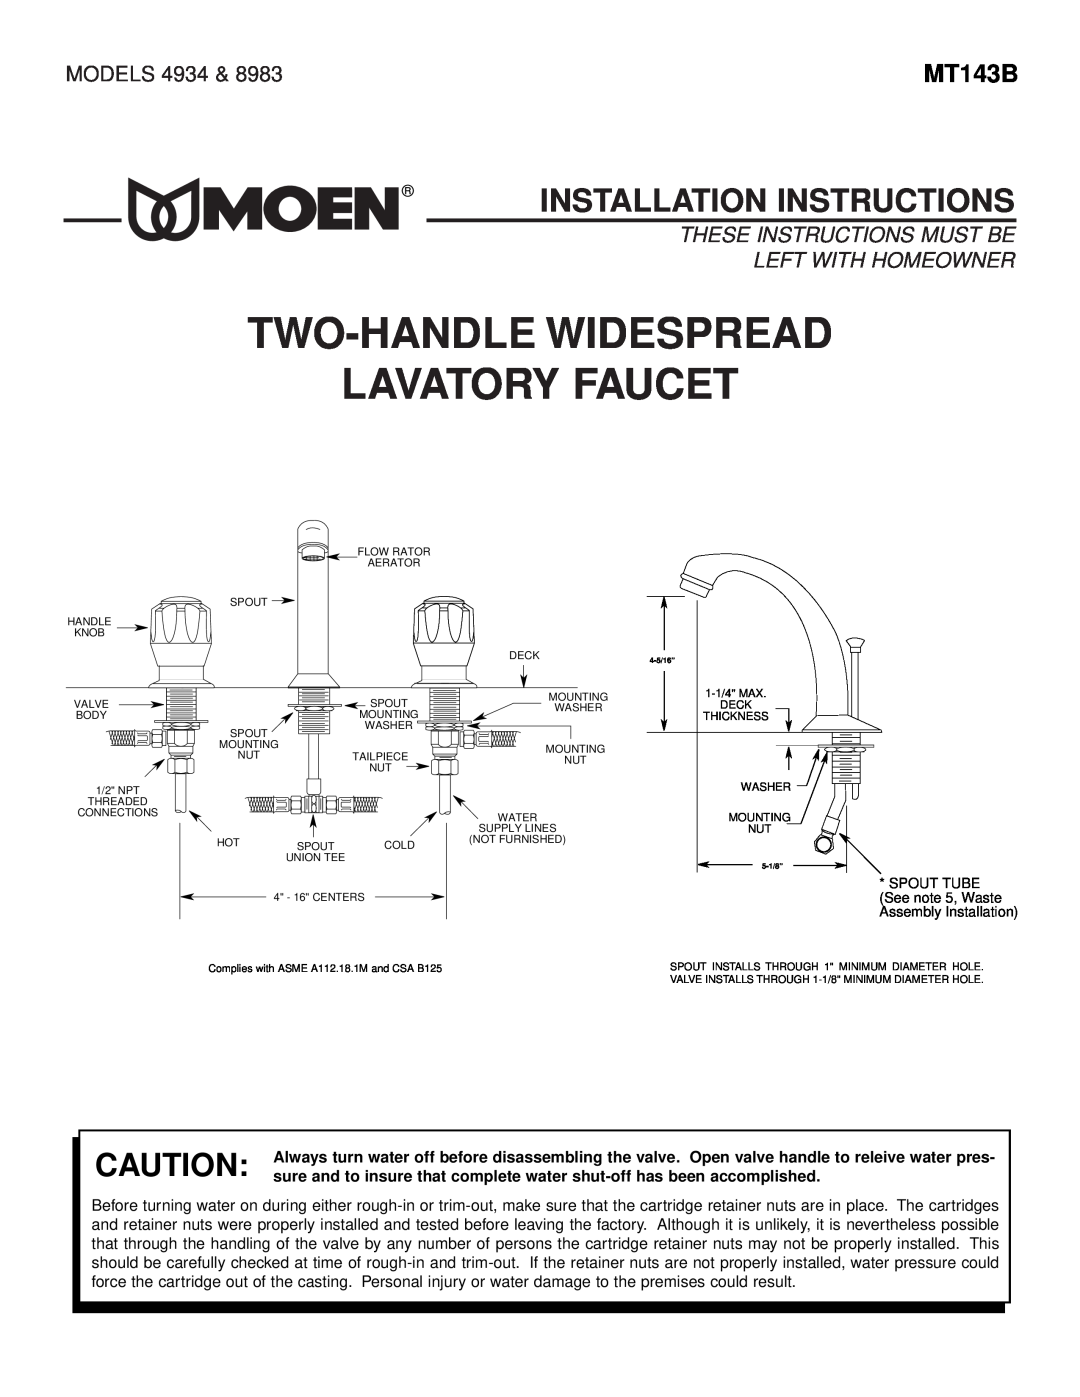 Moen 8963 installation instructions Two-Handle Widespread Lavatory Faucet, Installation Instructions, MT143B, MODELS 4934 